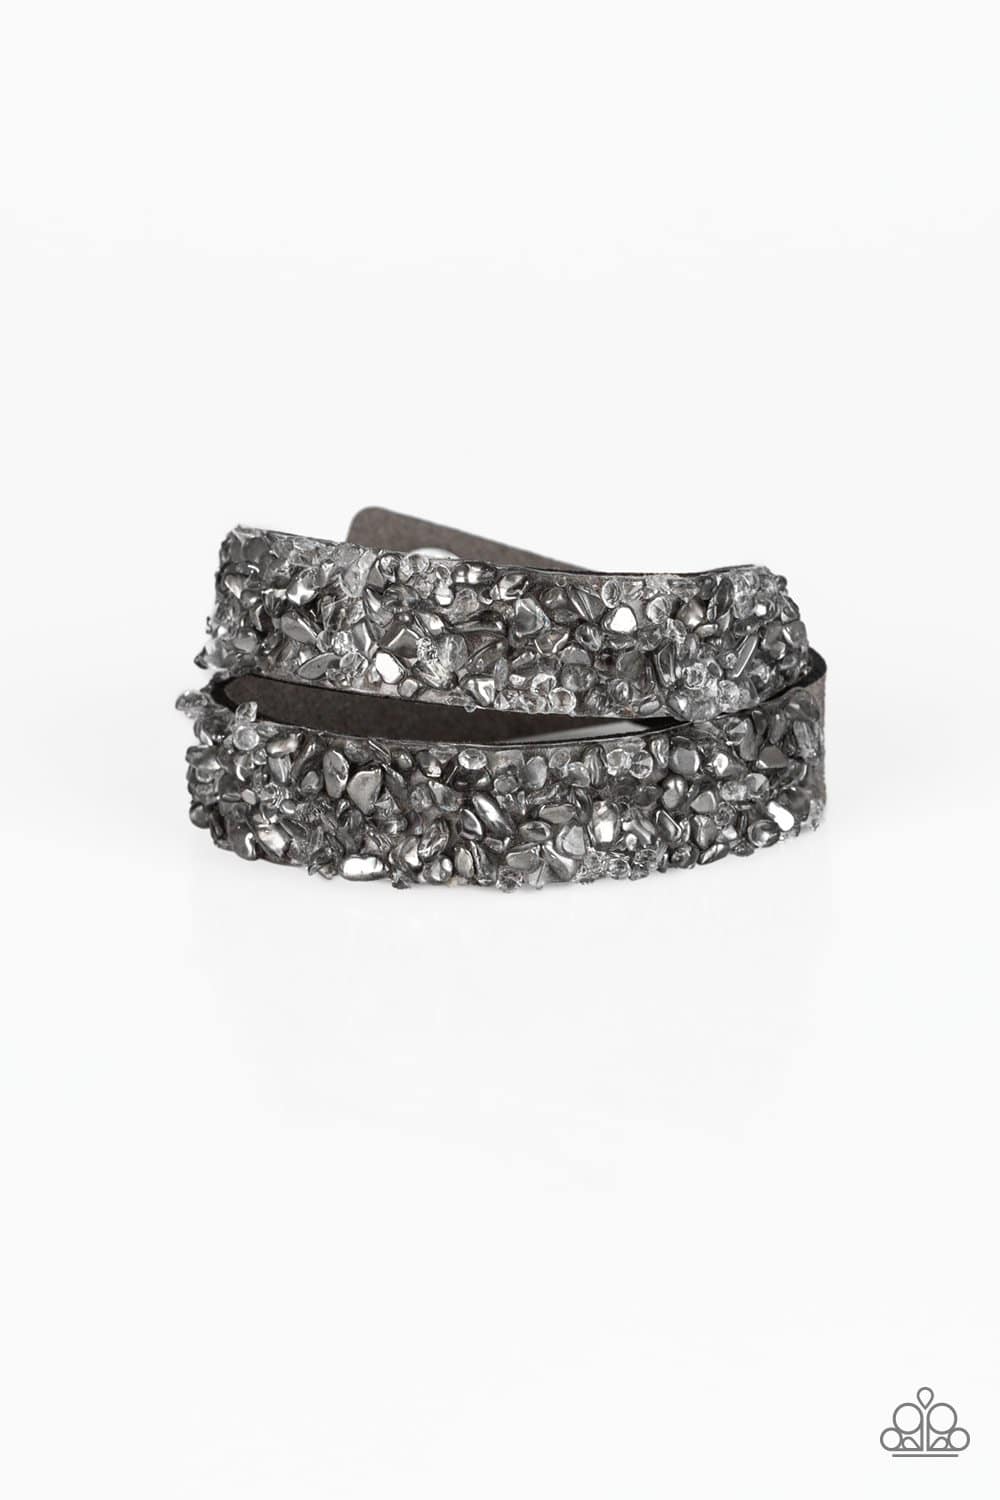 CRUSH Hour - Silver Crushed Rock Wrap Bracelet - Paparazzi Accessories - GlaMarous Titi Jewels